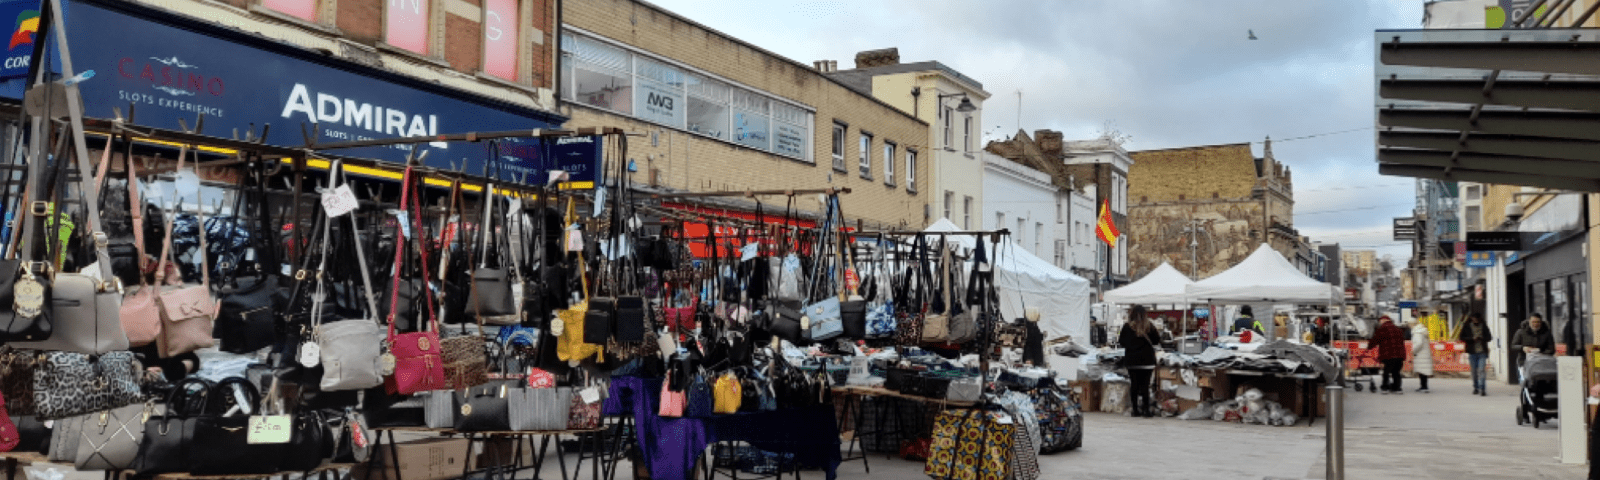 street market in dartford